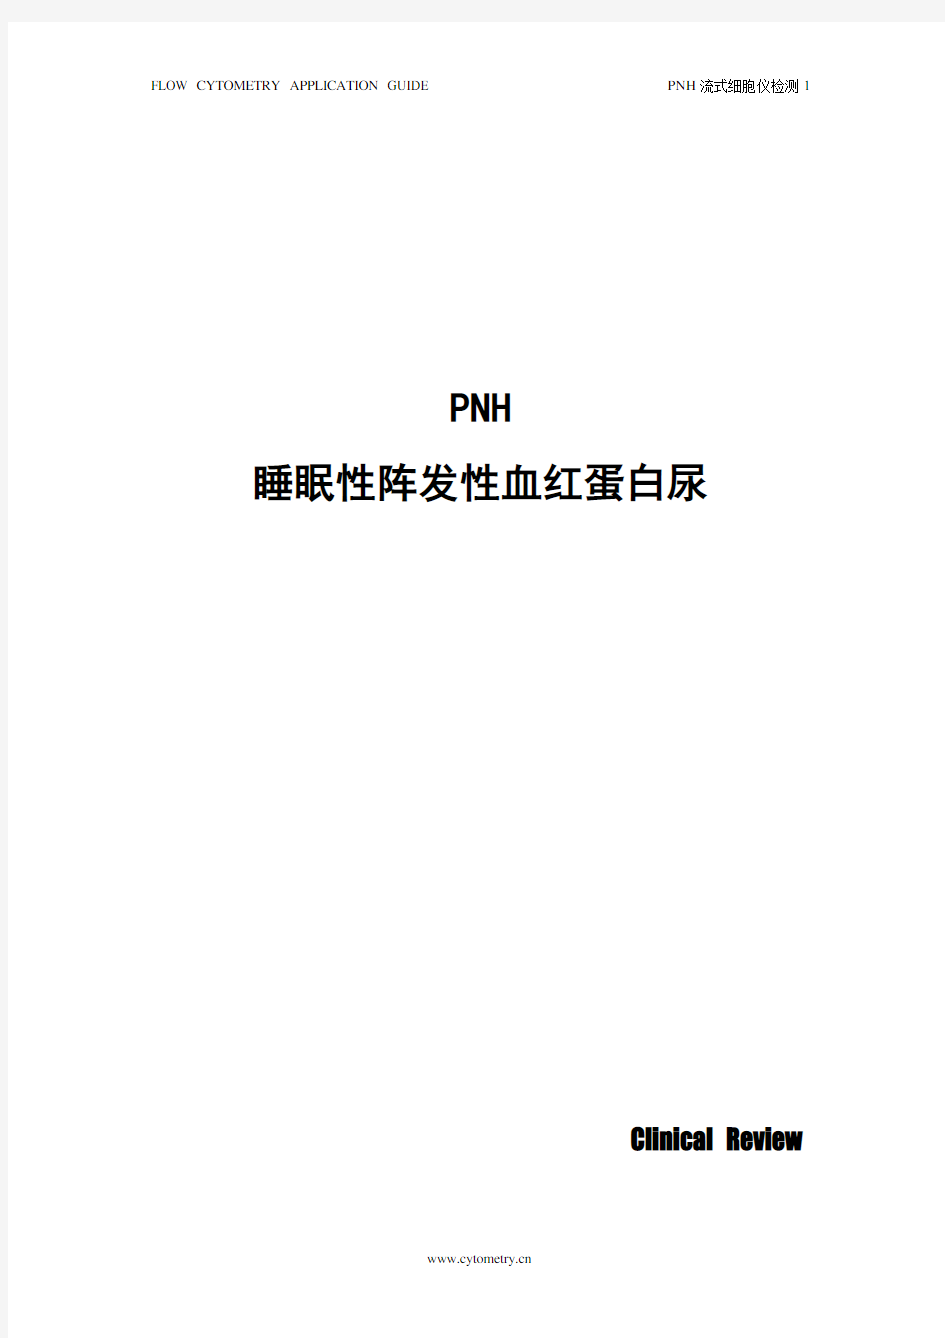 PNH 睡眠性阵发性血红蛋白尿简述